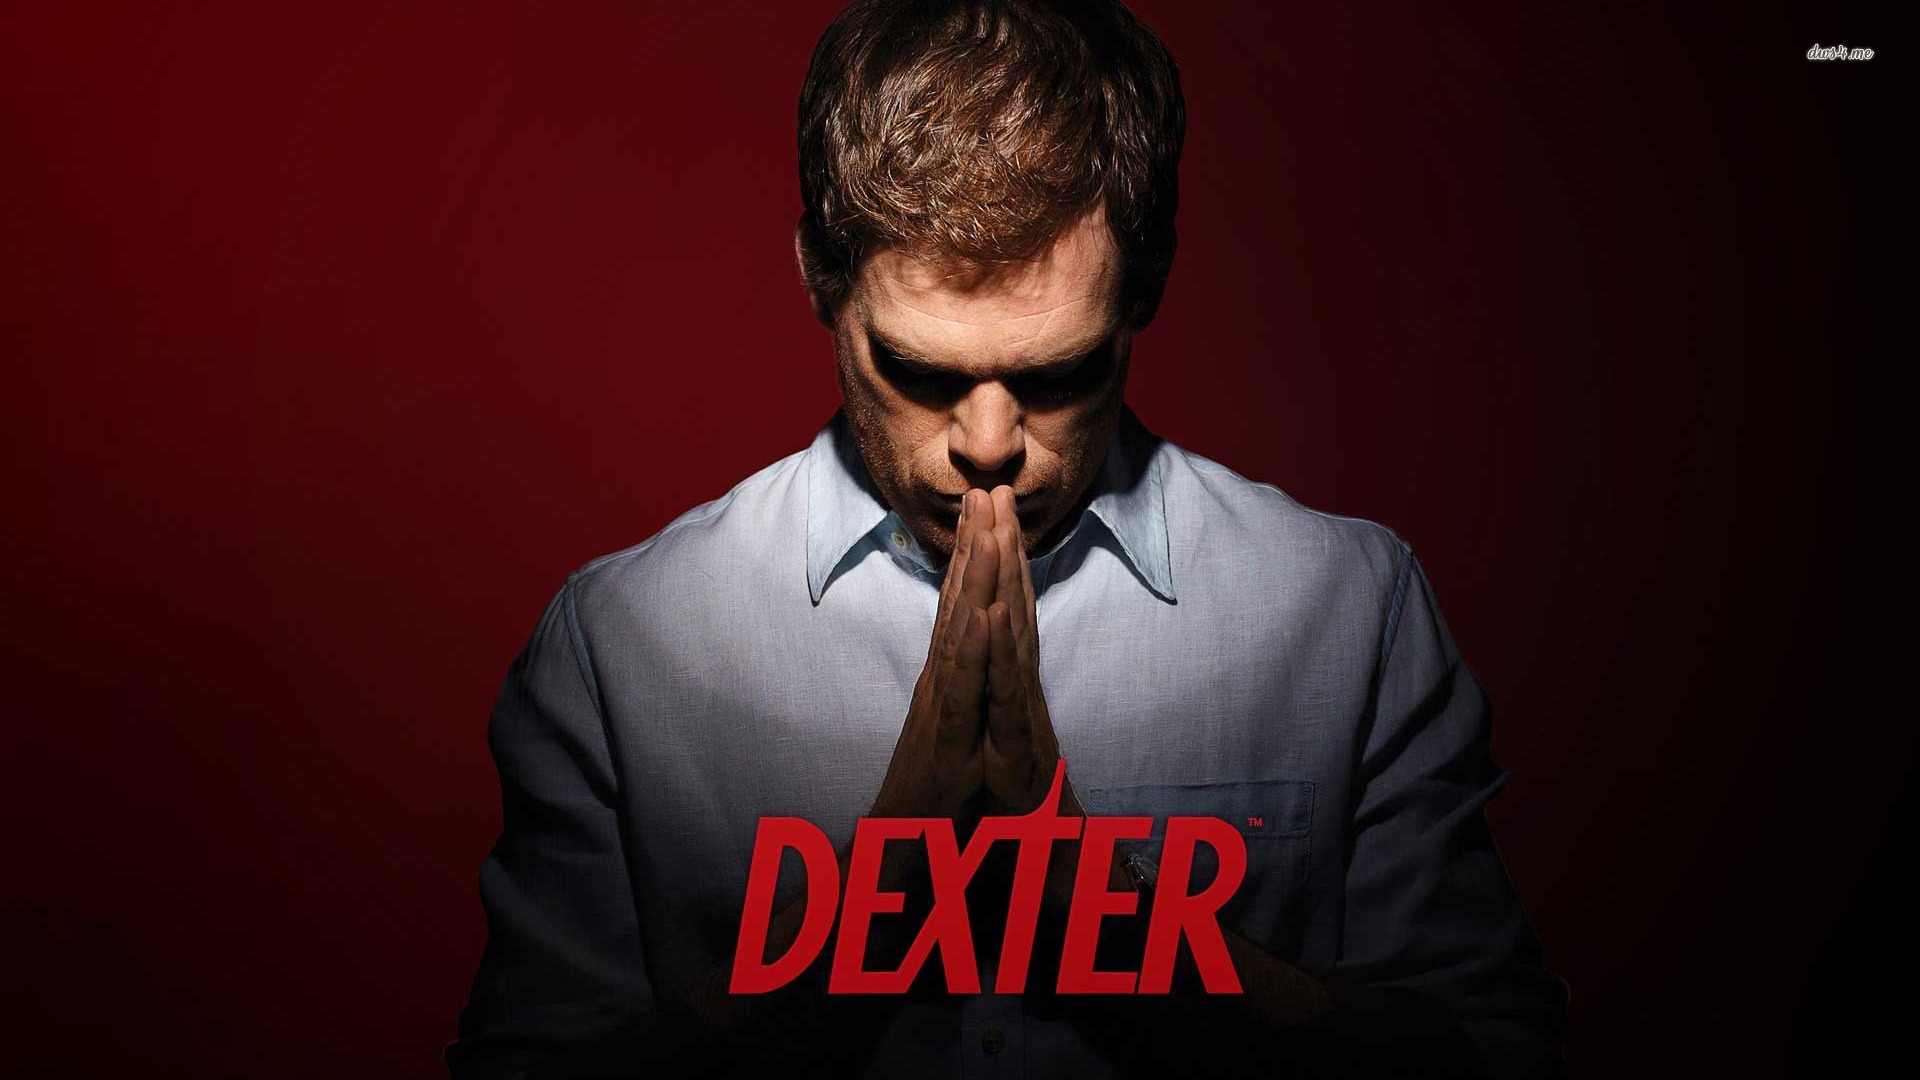 Amazing Dexter Pictures & Backgrounds